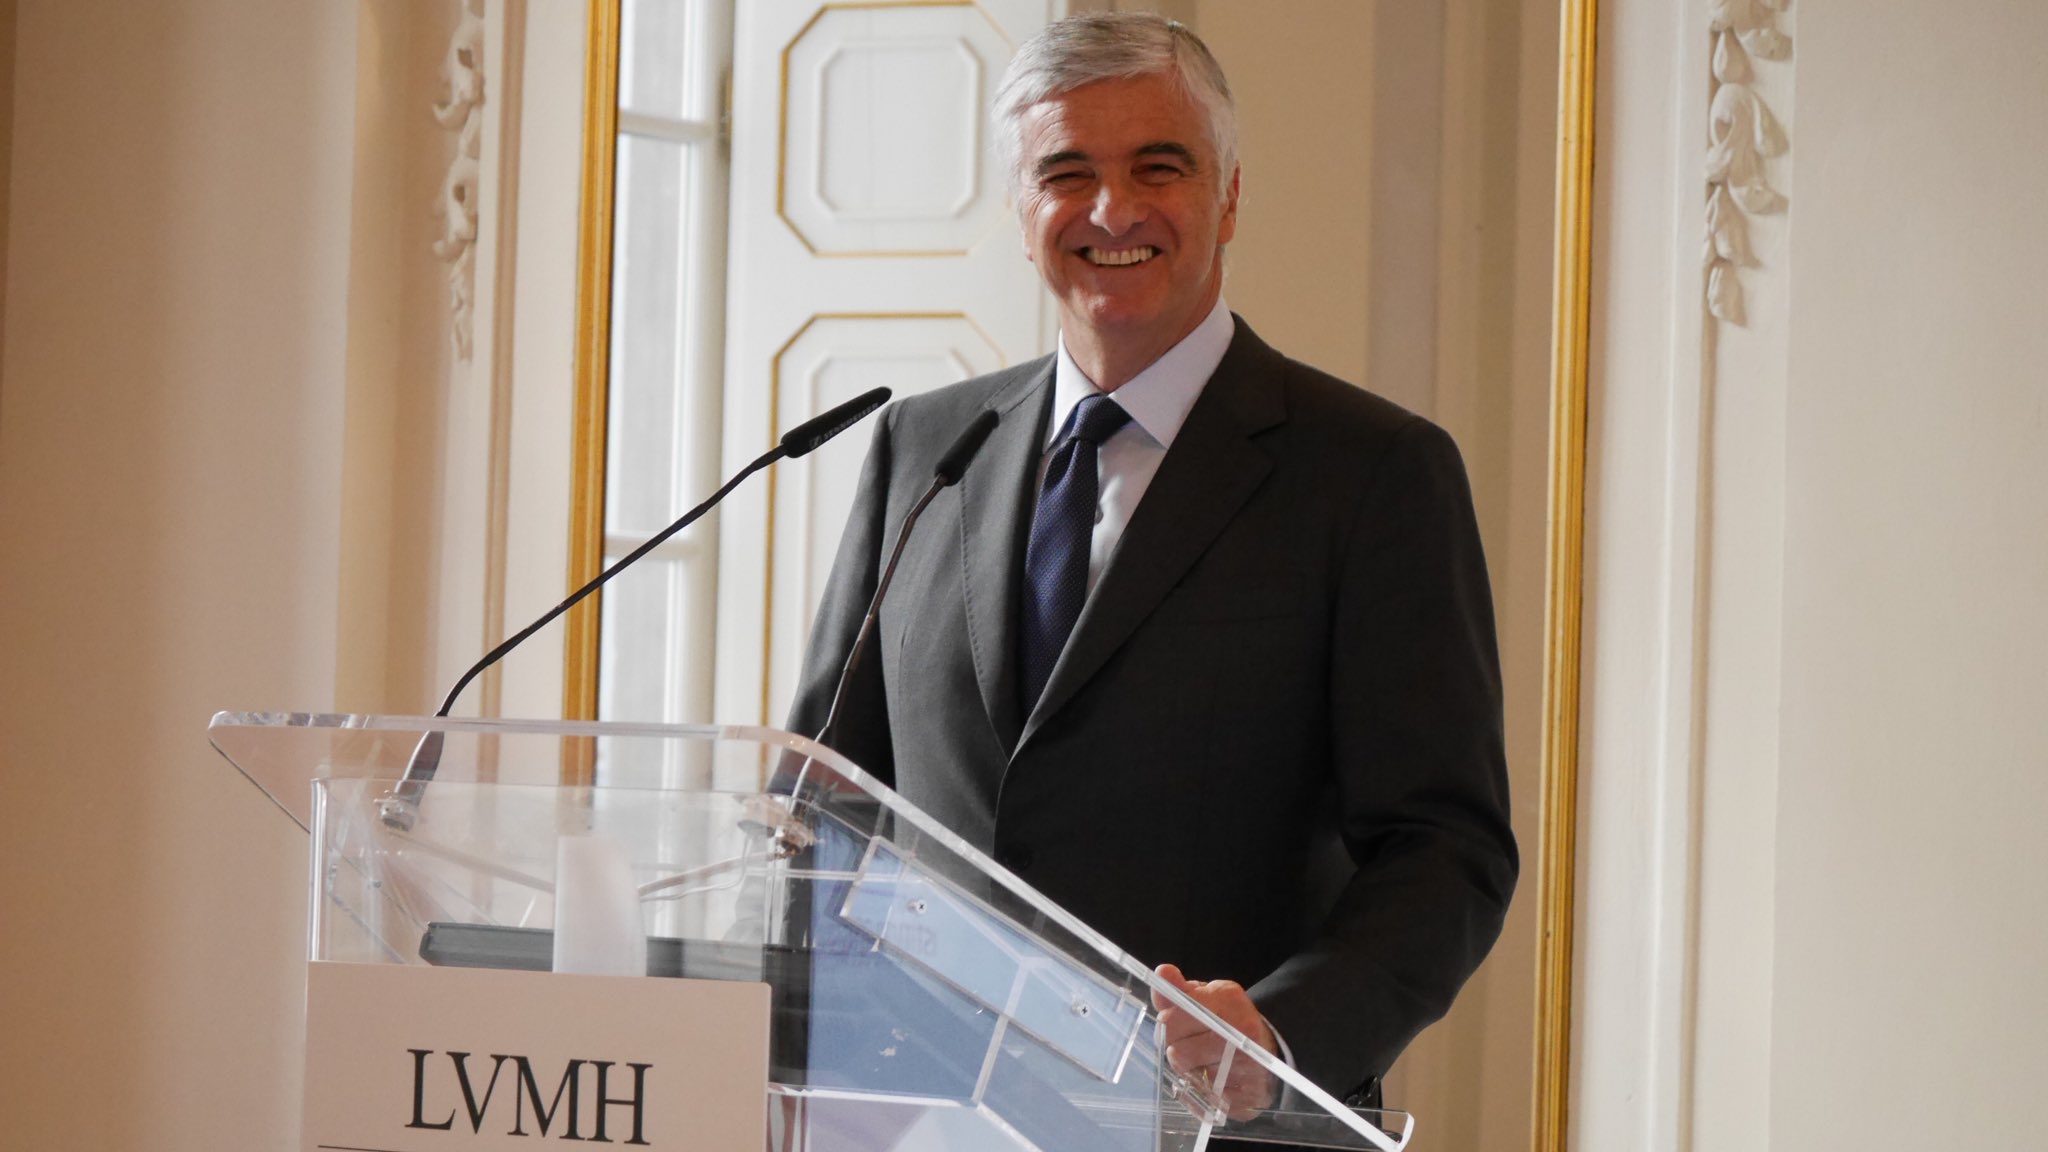 The LVMH group inaugurates the Manifattura Thélios, a new Italian